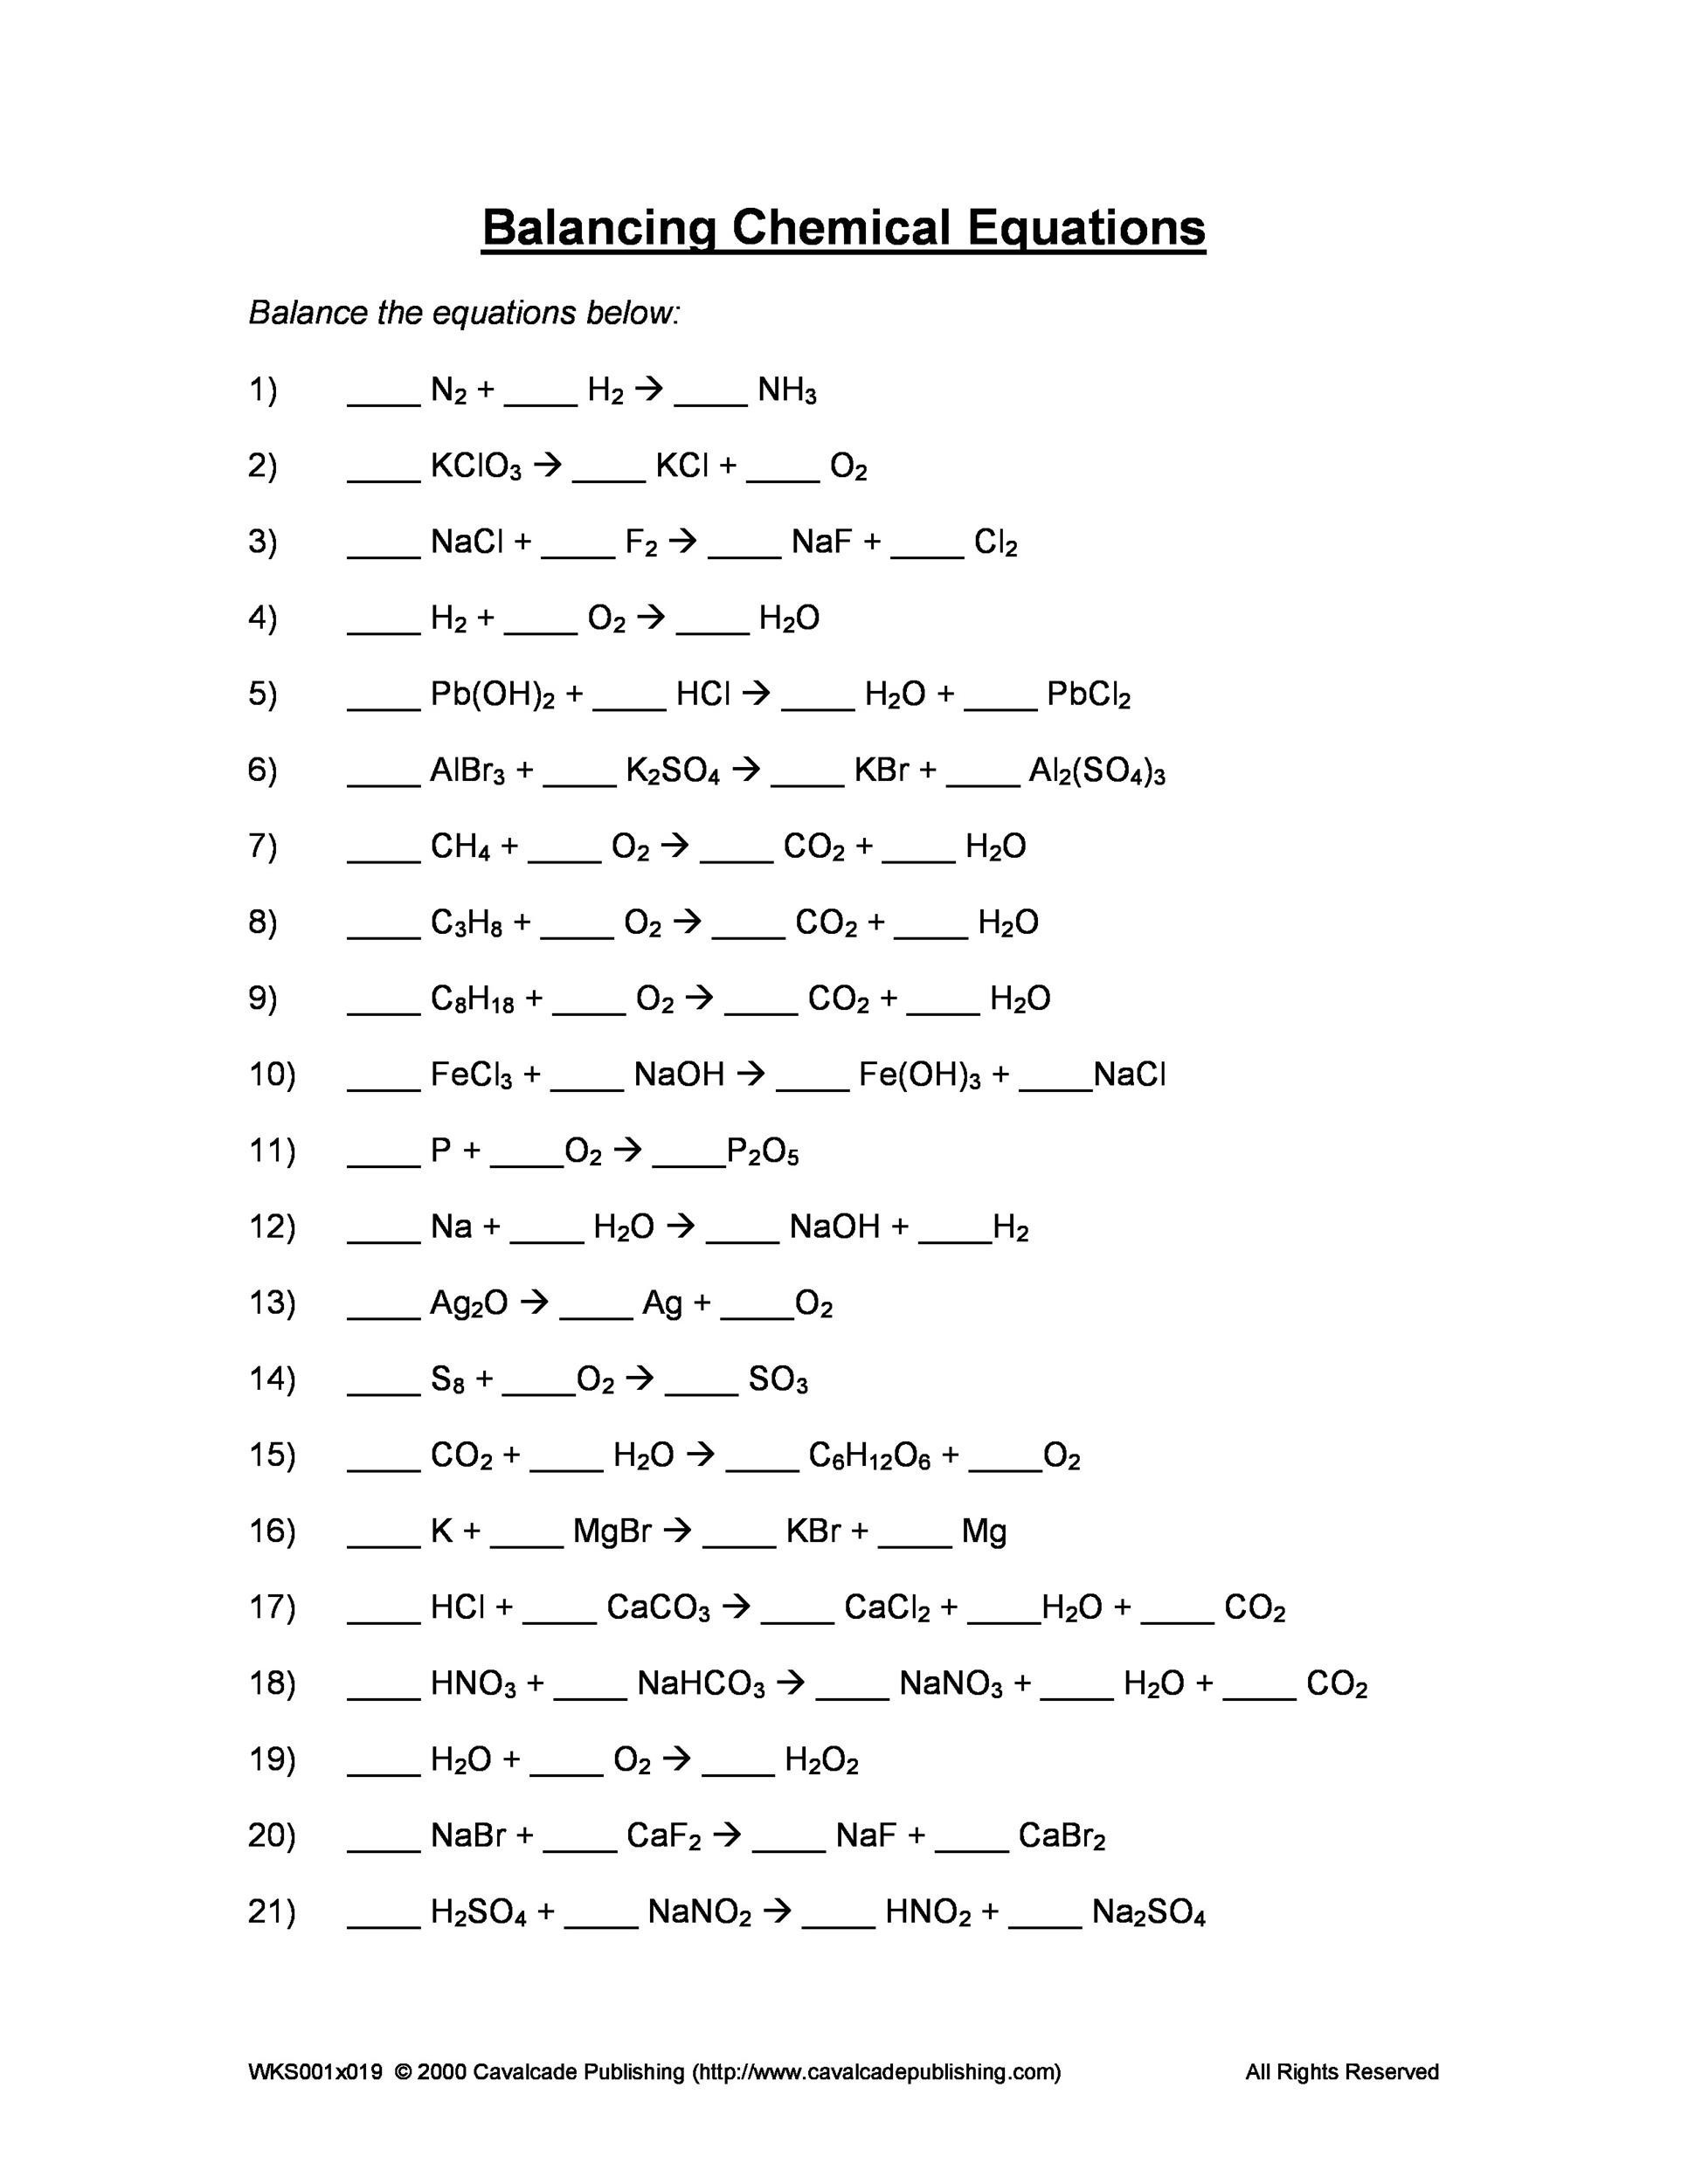 balancing-chemical-equation-worksheet-49-balancing-chemical-equations-worksheets-with-answers